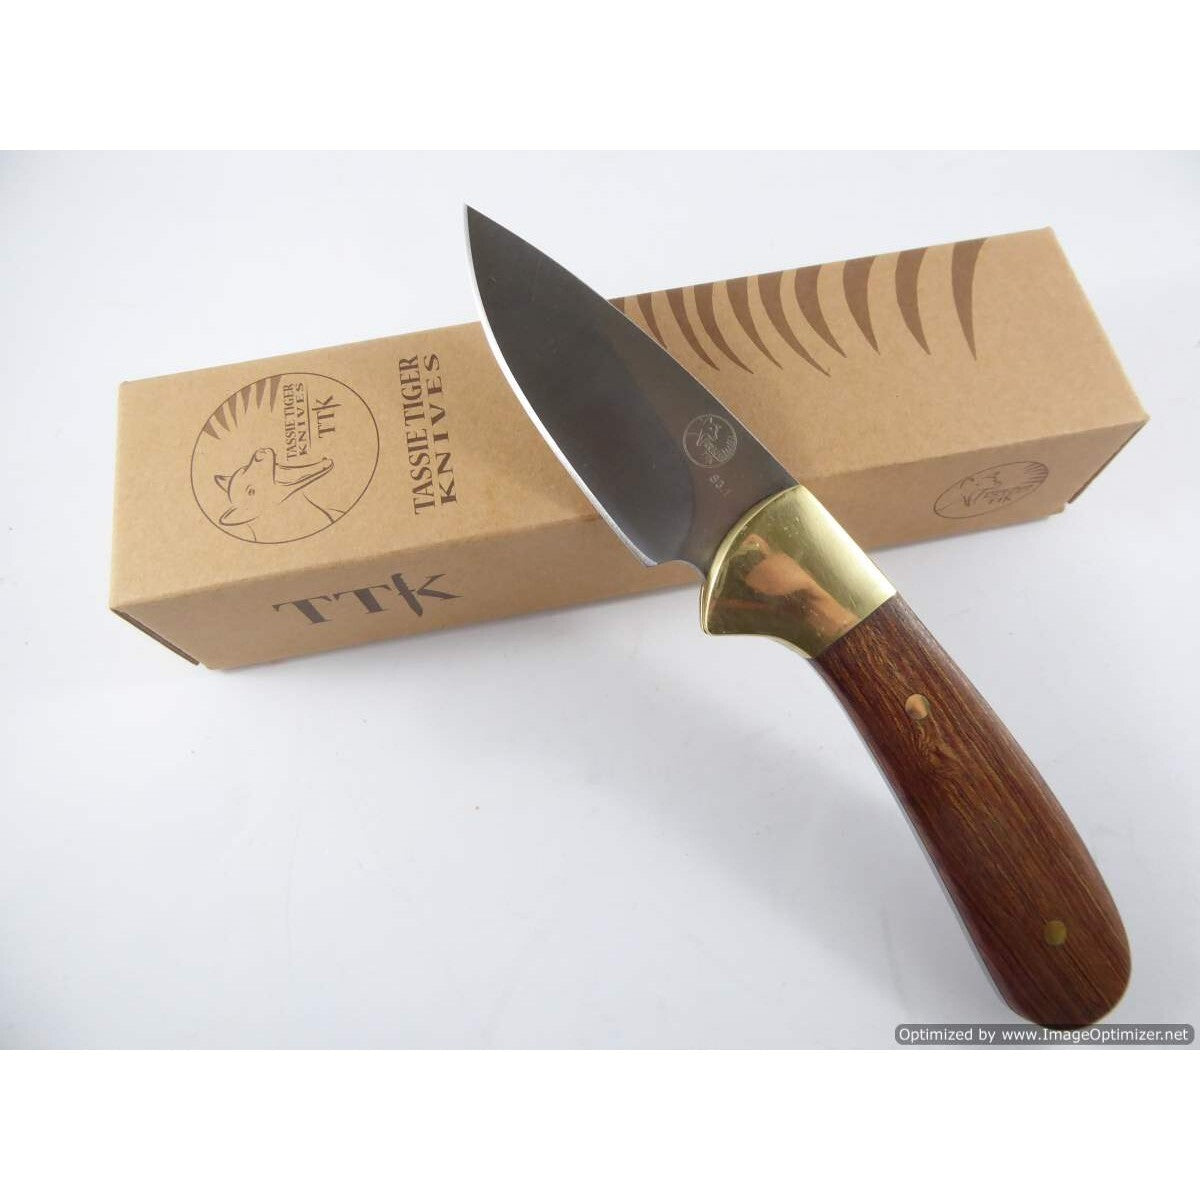 Tassie Tiger Knives Tassie Tiger 3 Inch Fixed Blade Skinner Hunting Knife - Nylon Sheath #s3.1N Dim Gray